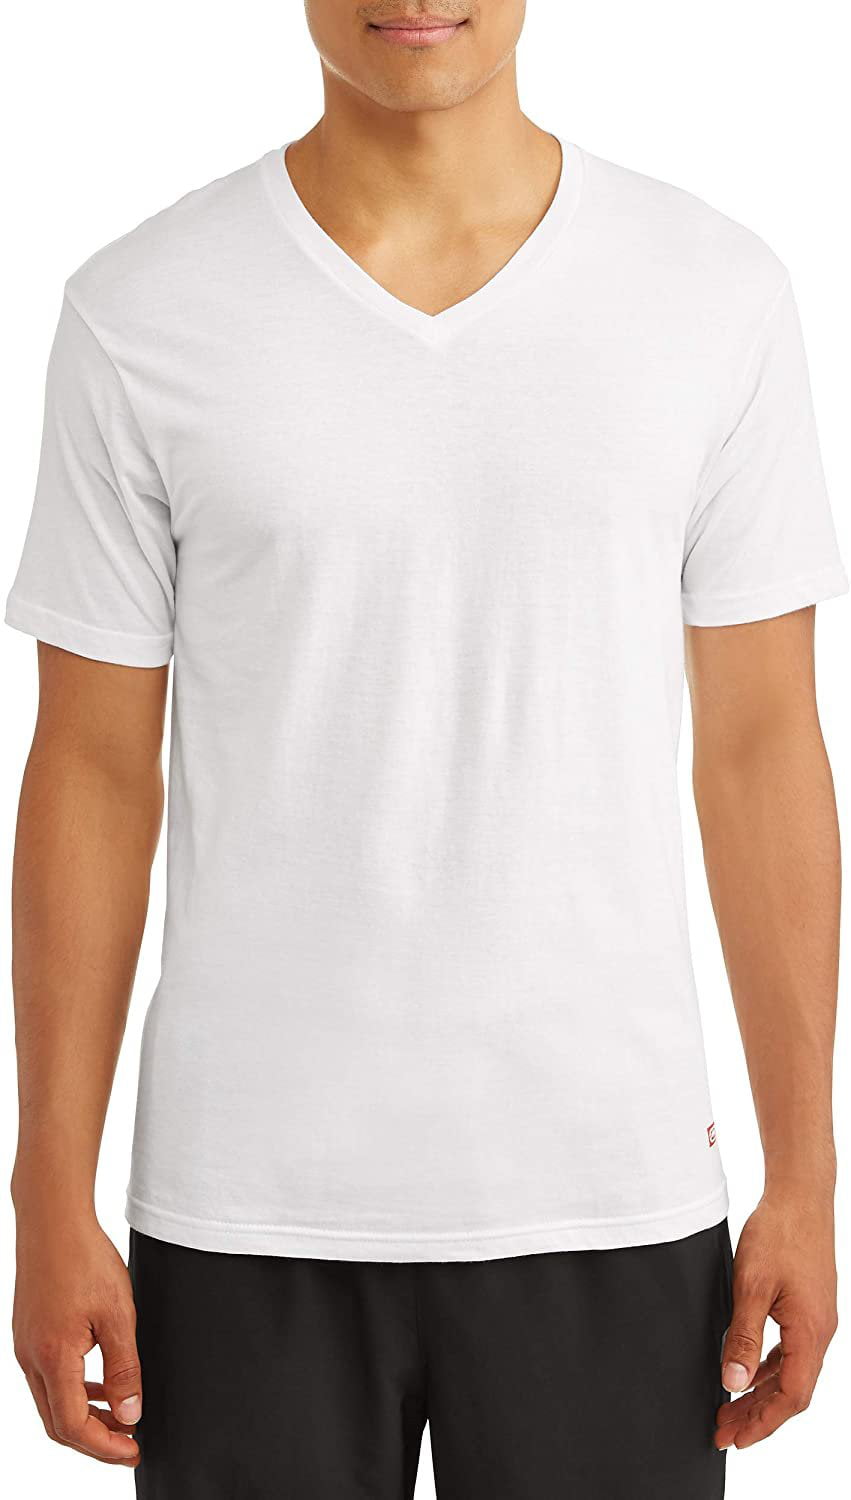 Ecko unltd Mens 3 Pack of v Neck t-Shirts Super Soft Ring Spun Cotton 100%  Cotton White